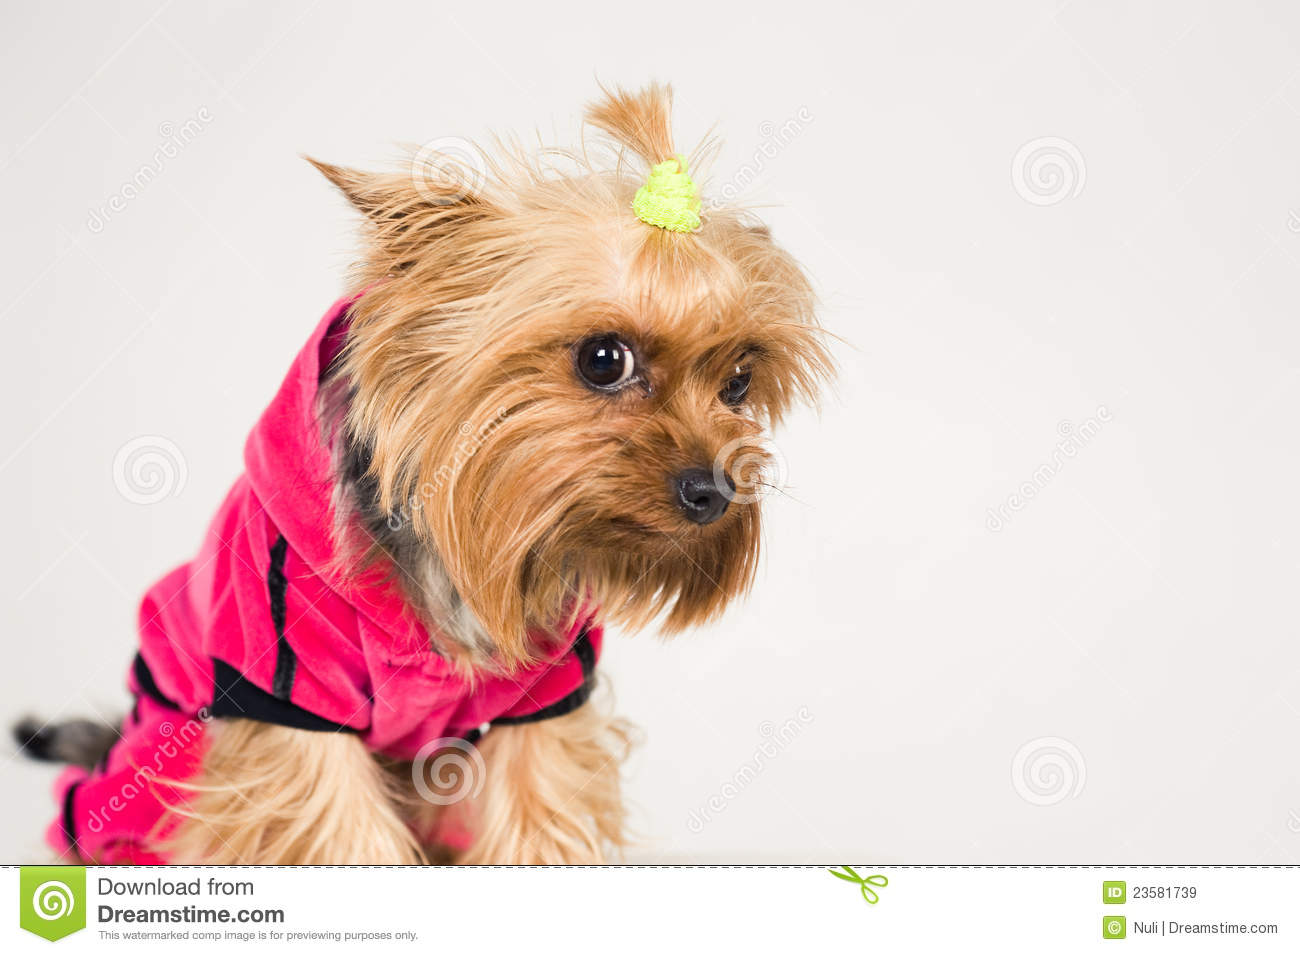 Little Dog Looking Ashamed Royalty Free Stock Images   Image  23581739